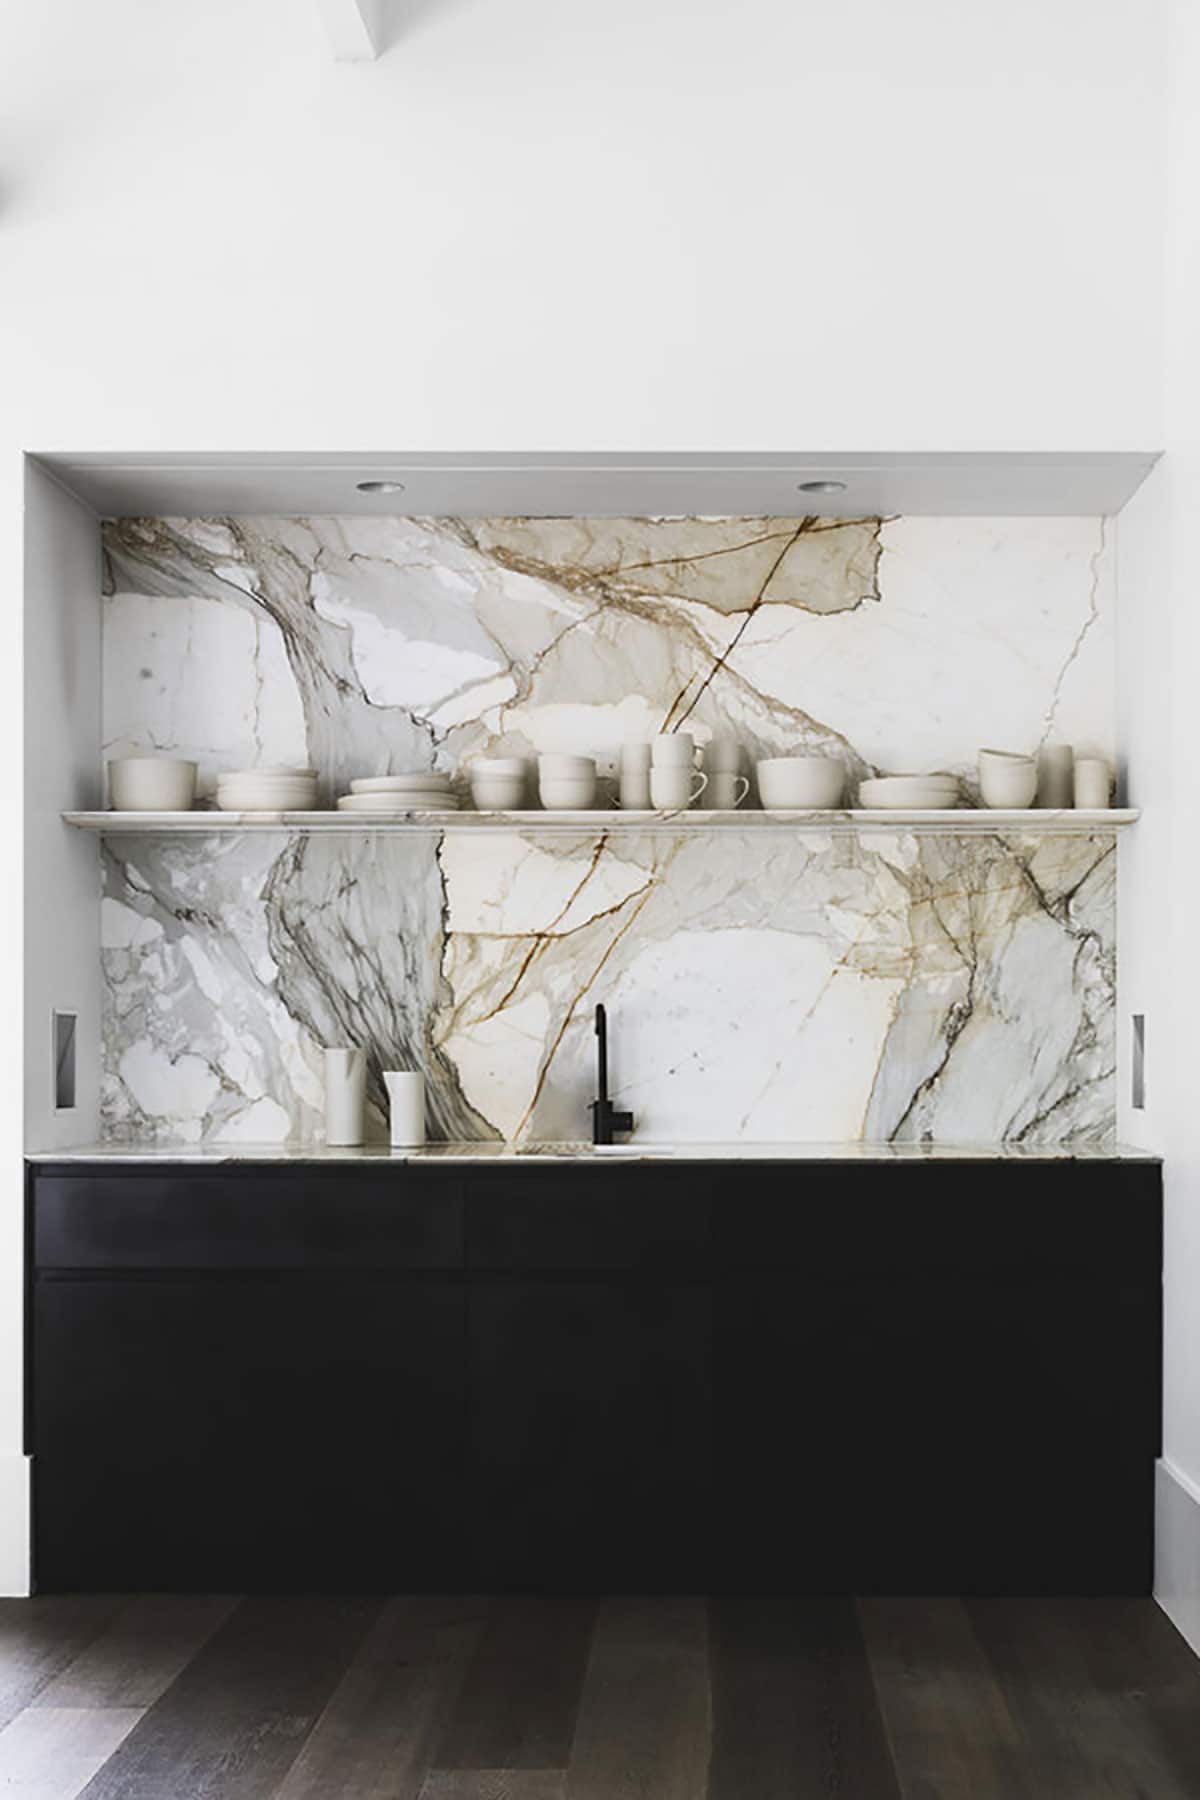 https://houseofhipsters.com/wp-content/uploads/2018/02/kitchen-makeover-marble-backslpash-modern-black-countertops.jpg